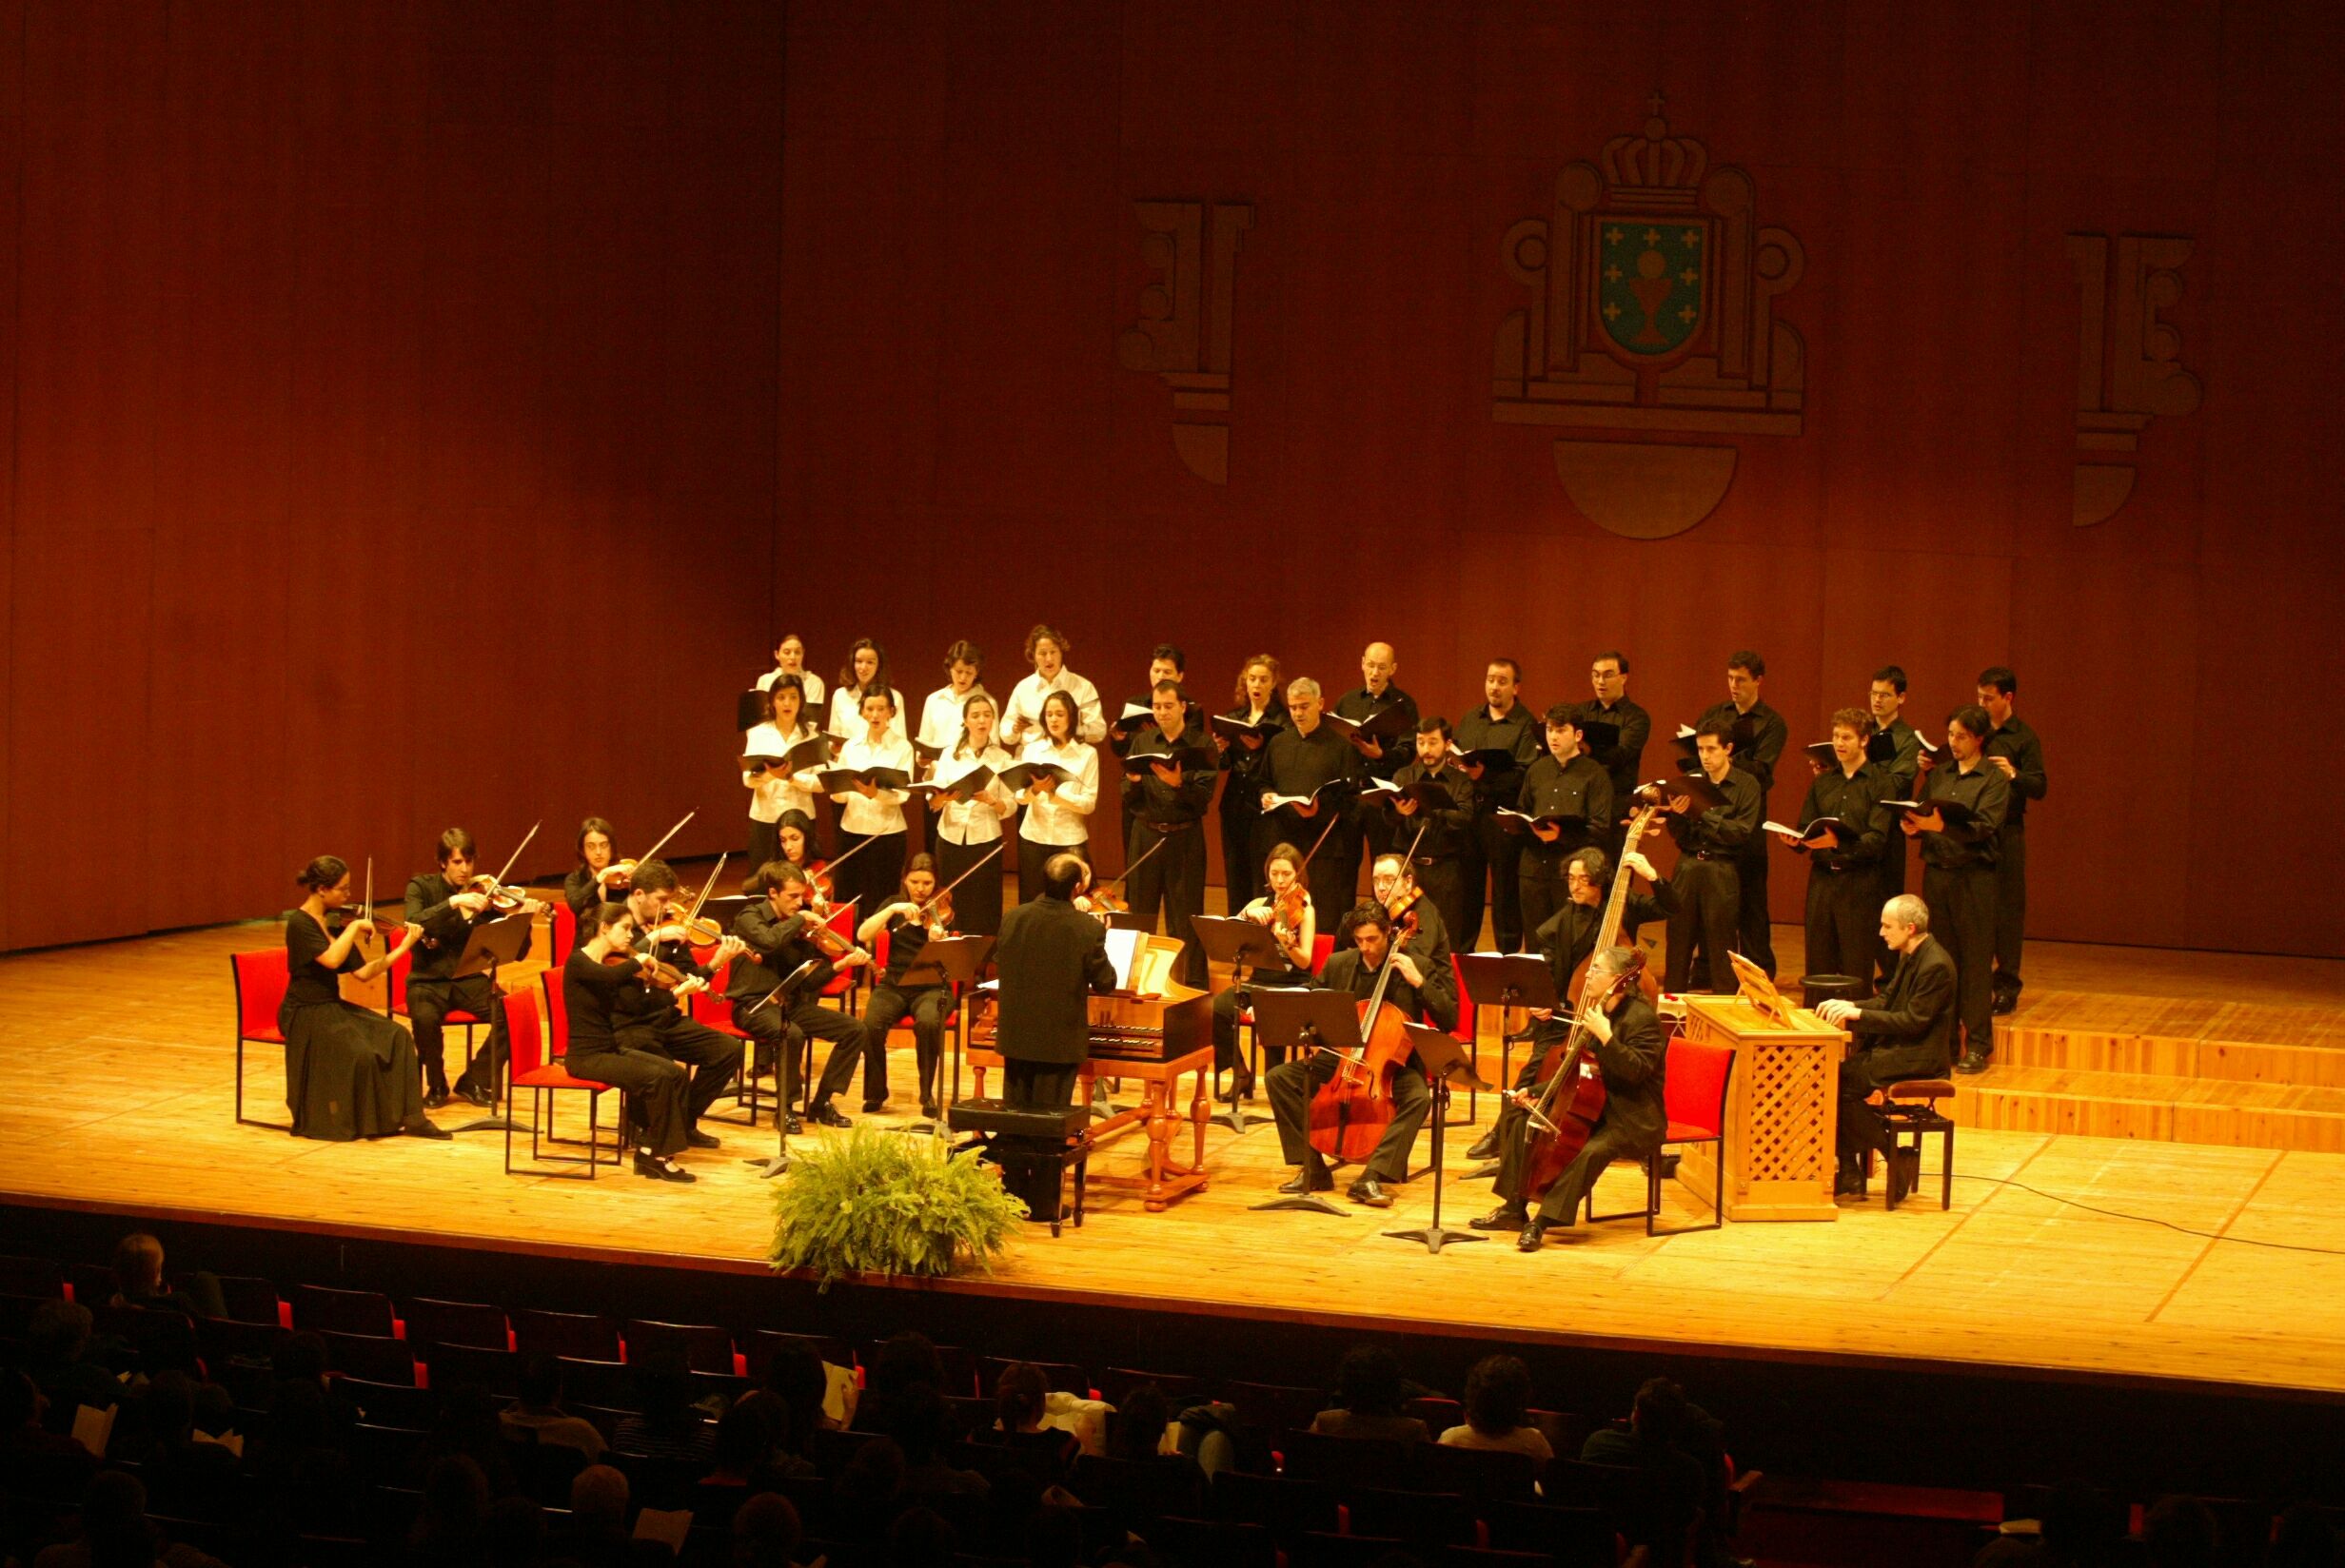 Auditorio de Galicia (Santiago de Compostela) 2004